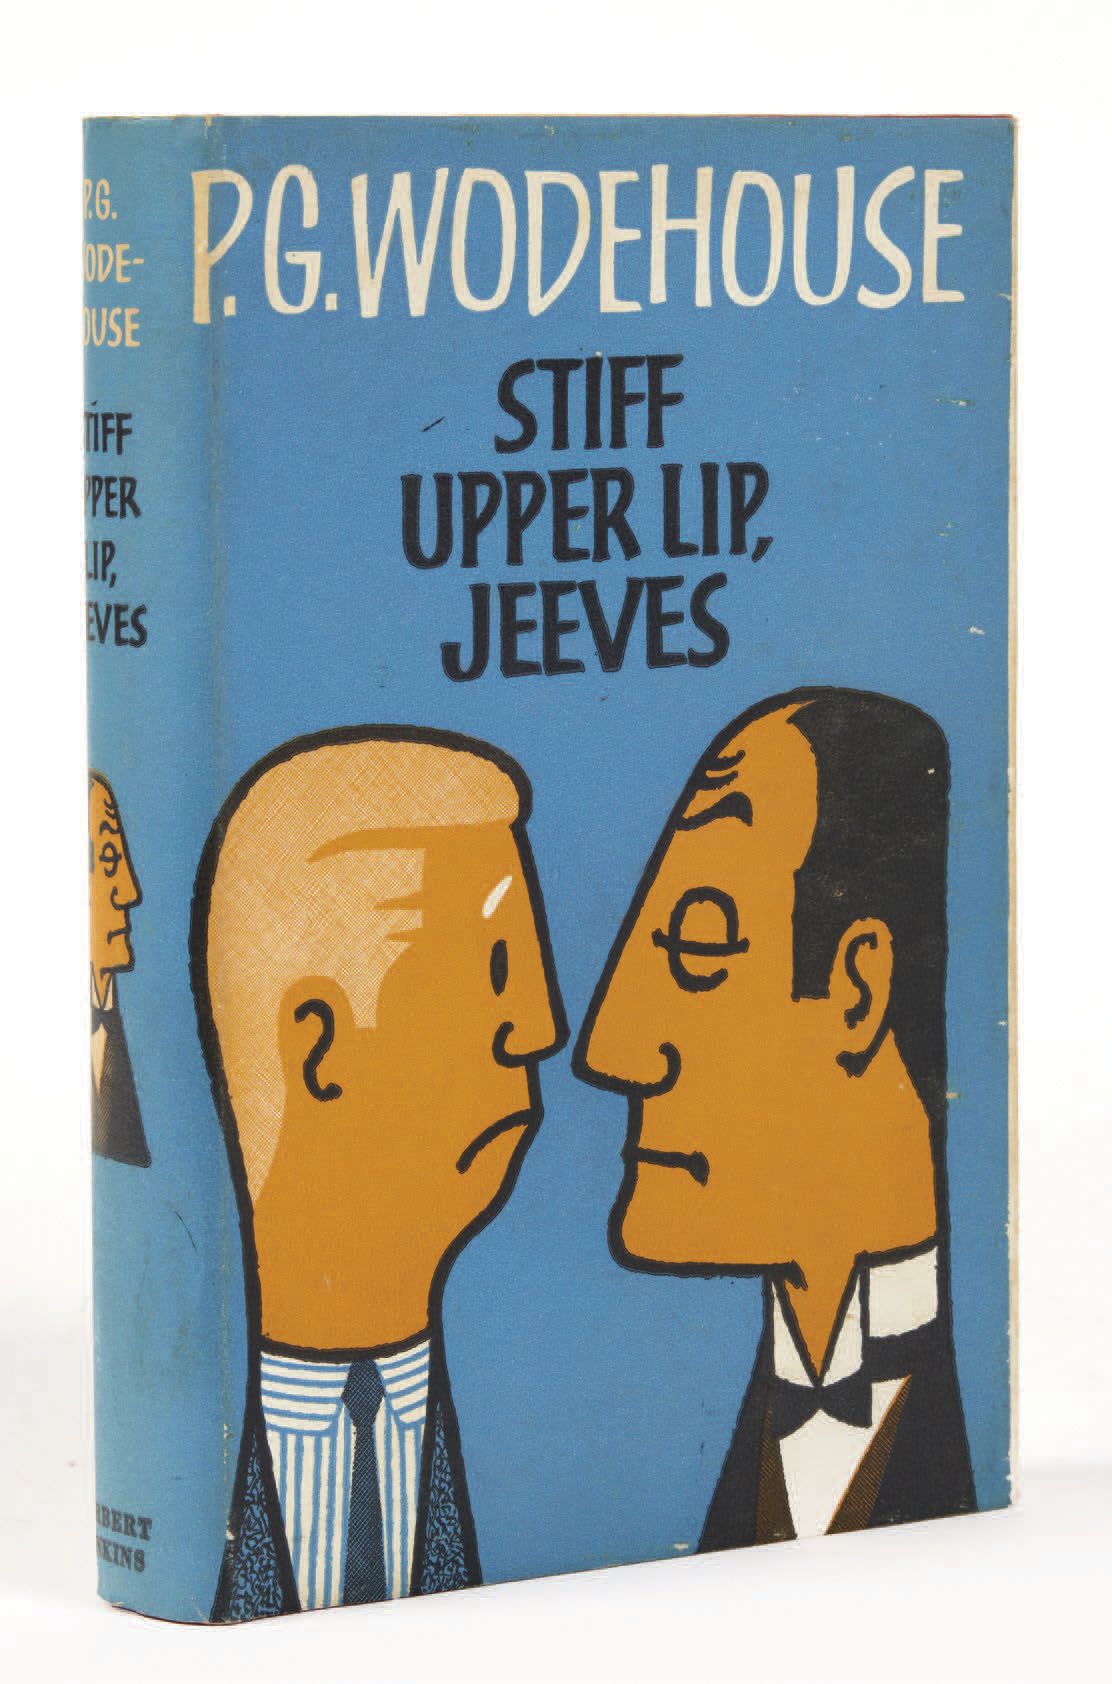 WODEHOUSE, P.G. El labio superior rígido, Jeeves. Londres, Herbert
Jenkins, 1963&hellip;